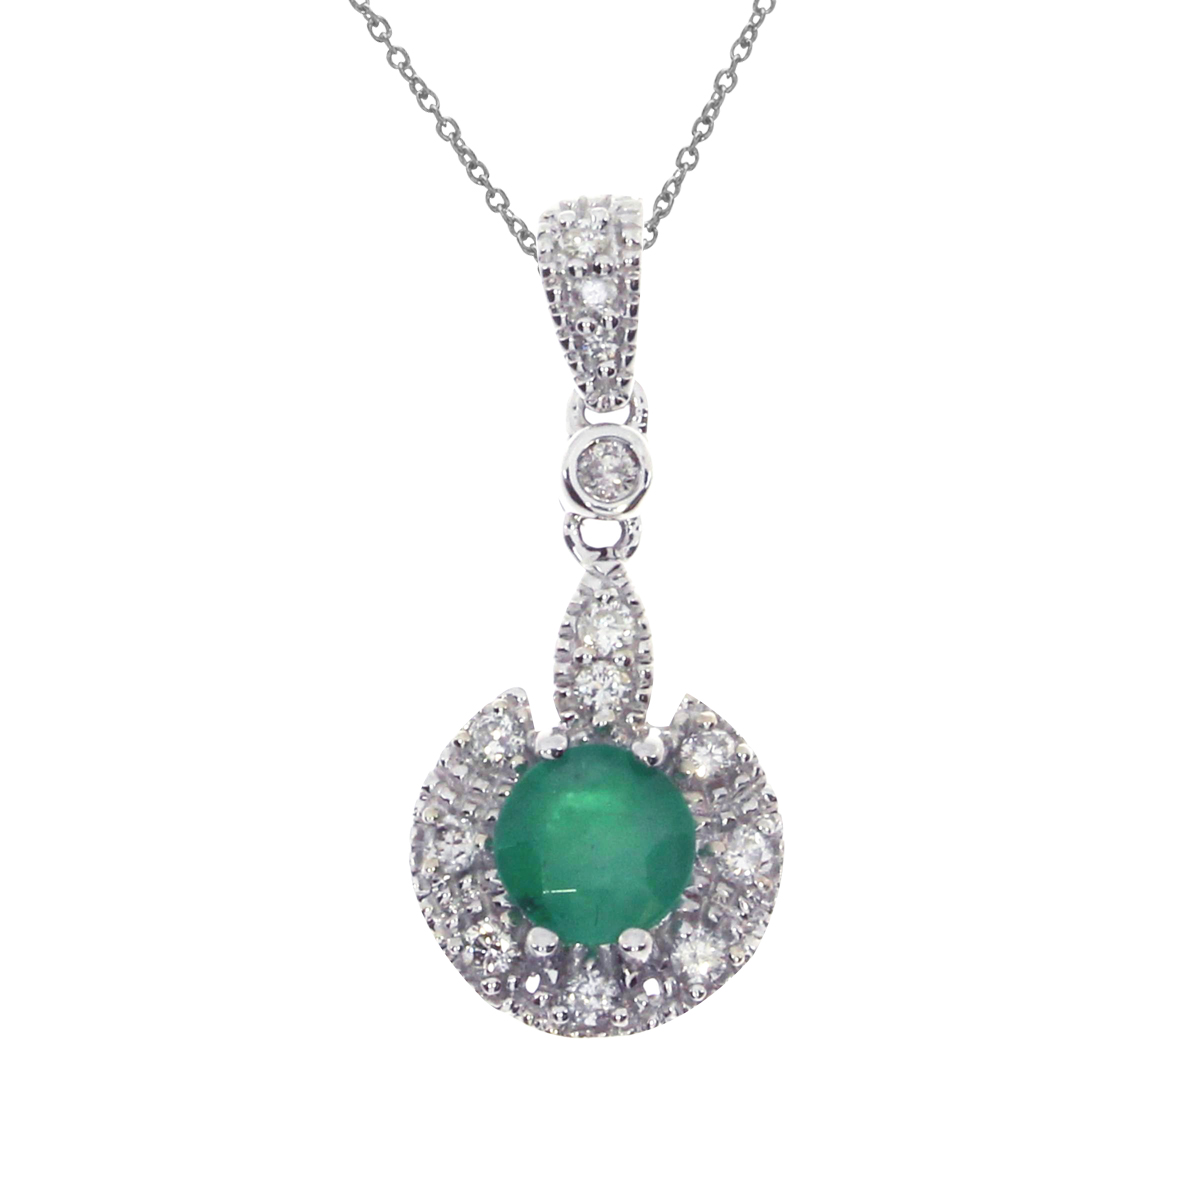 5 mm round genuine emerald pendant set in 14k white gold with .16 ct diamonds.